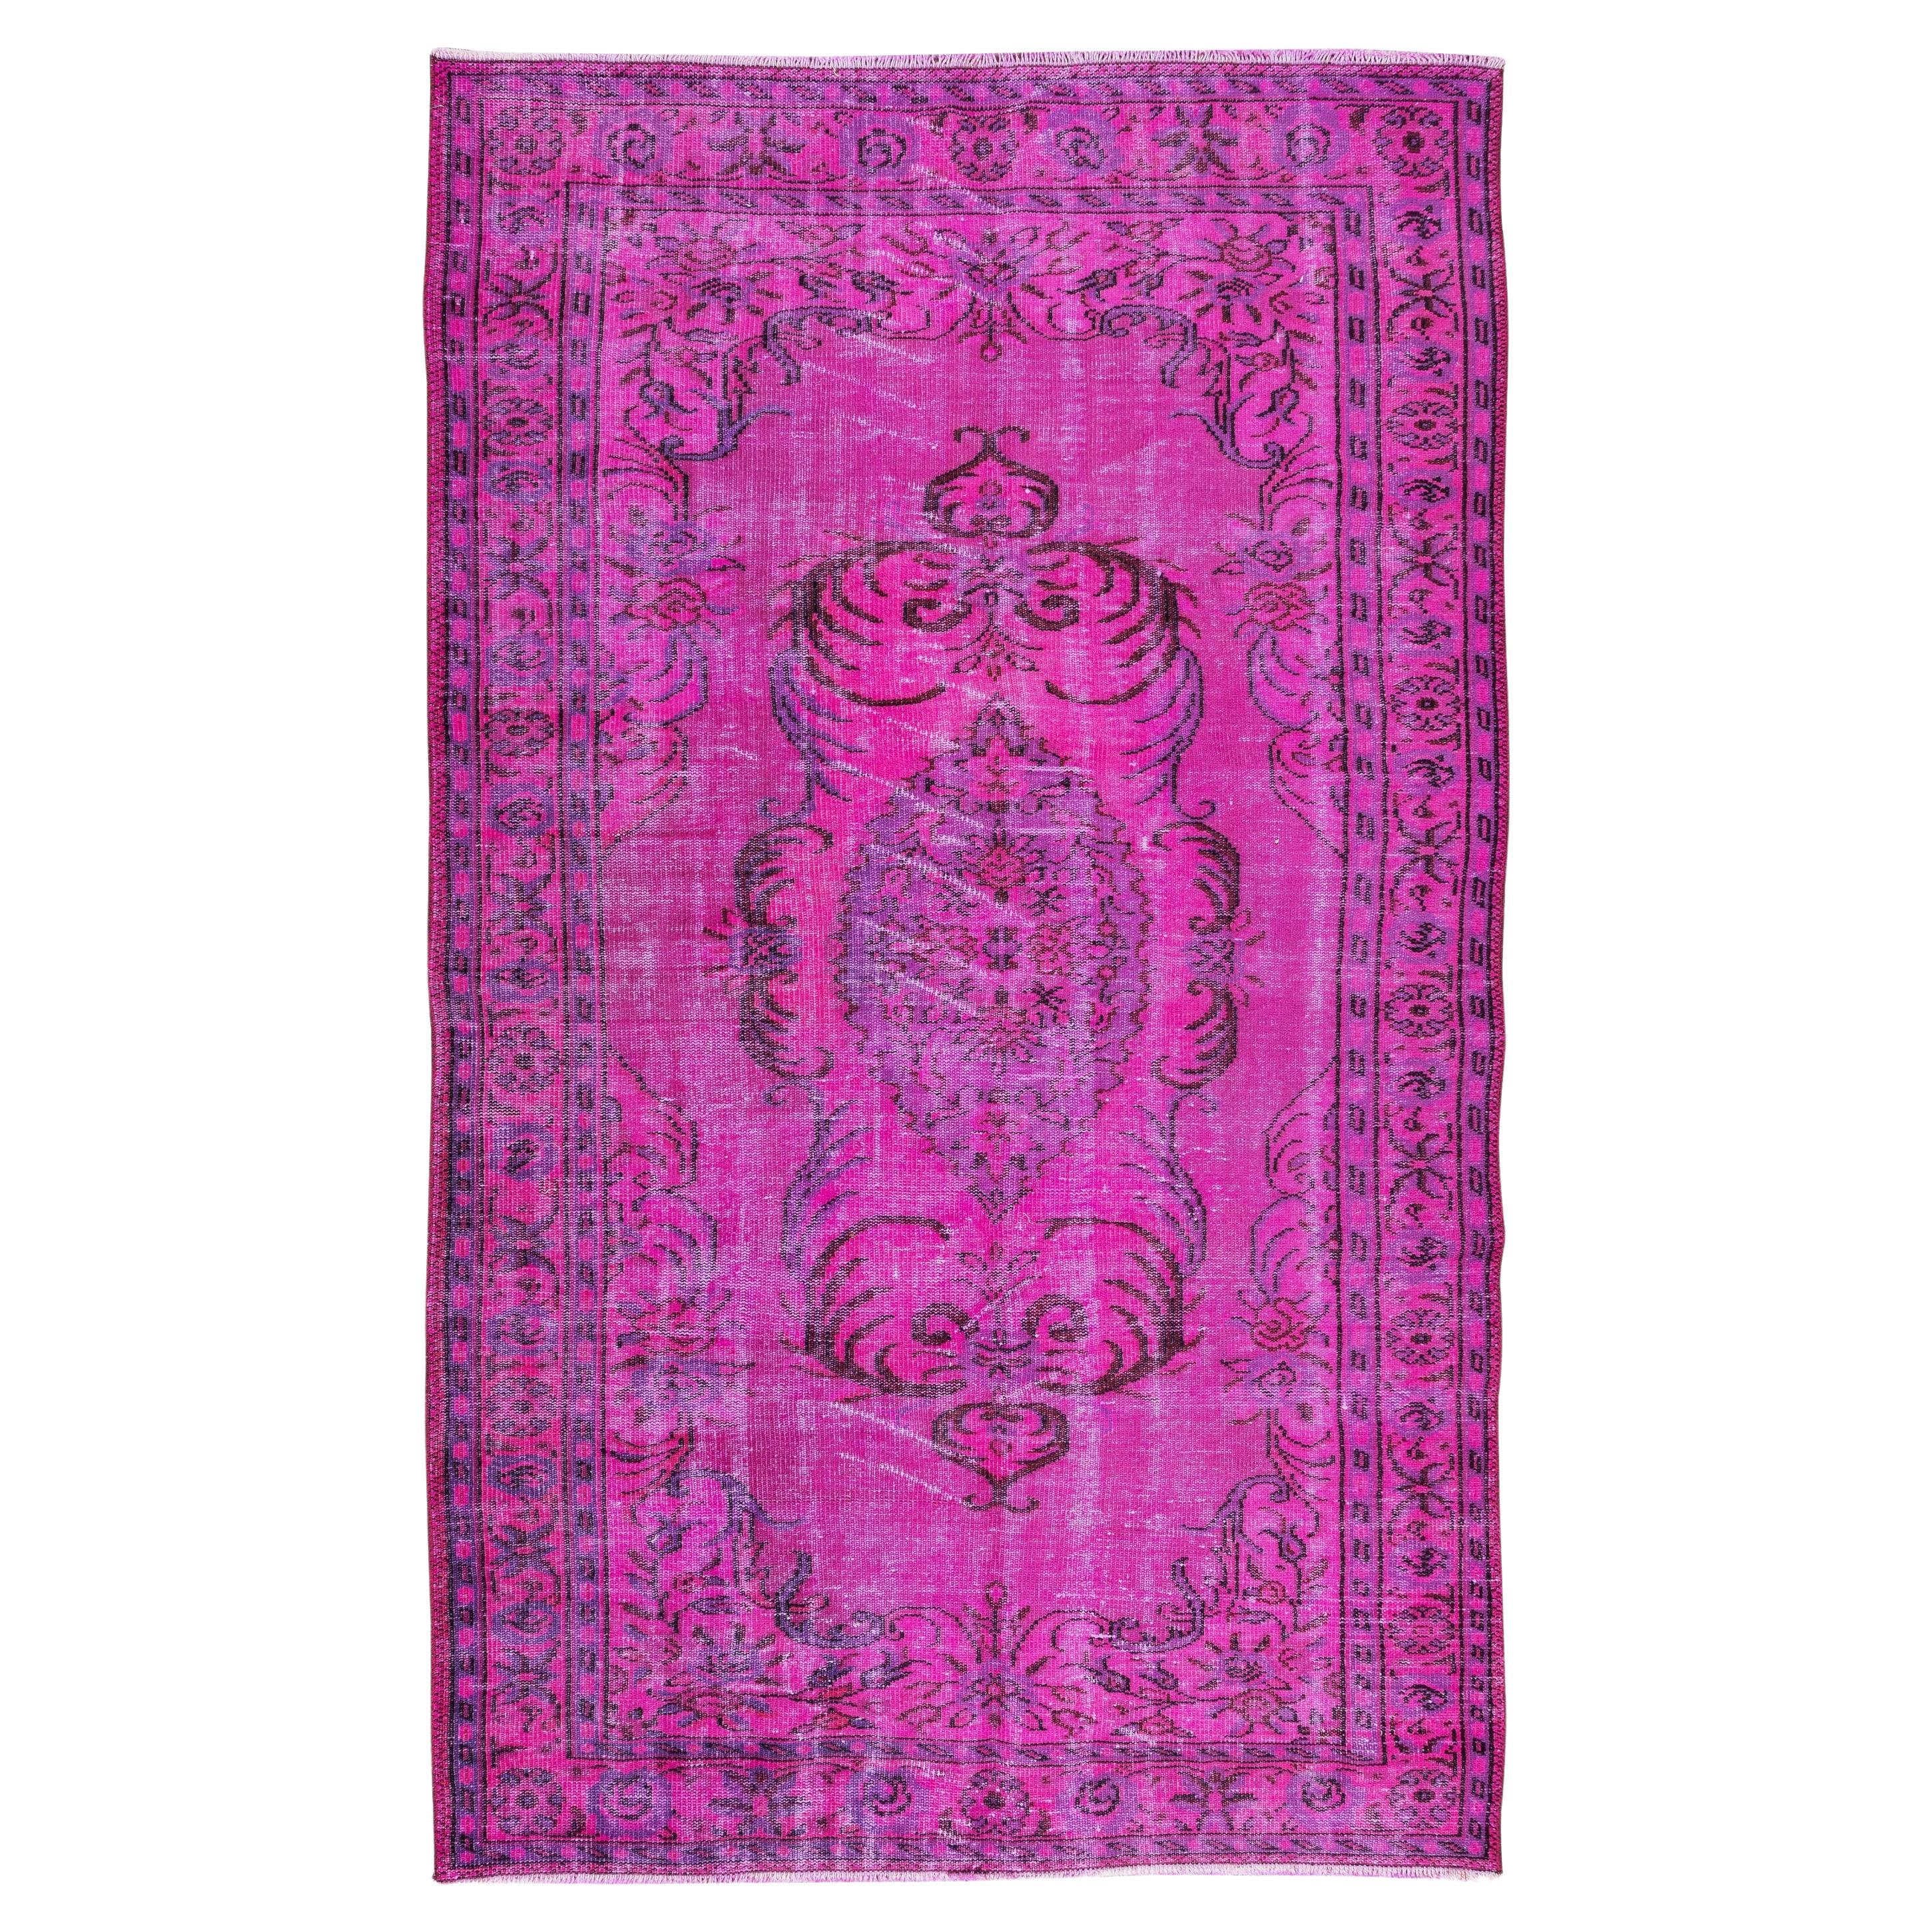 Vintage Handmade Turkish Wool Area Rug Over-Dyed in Fuchsia Pink